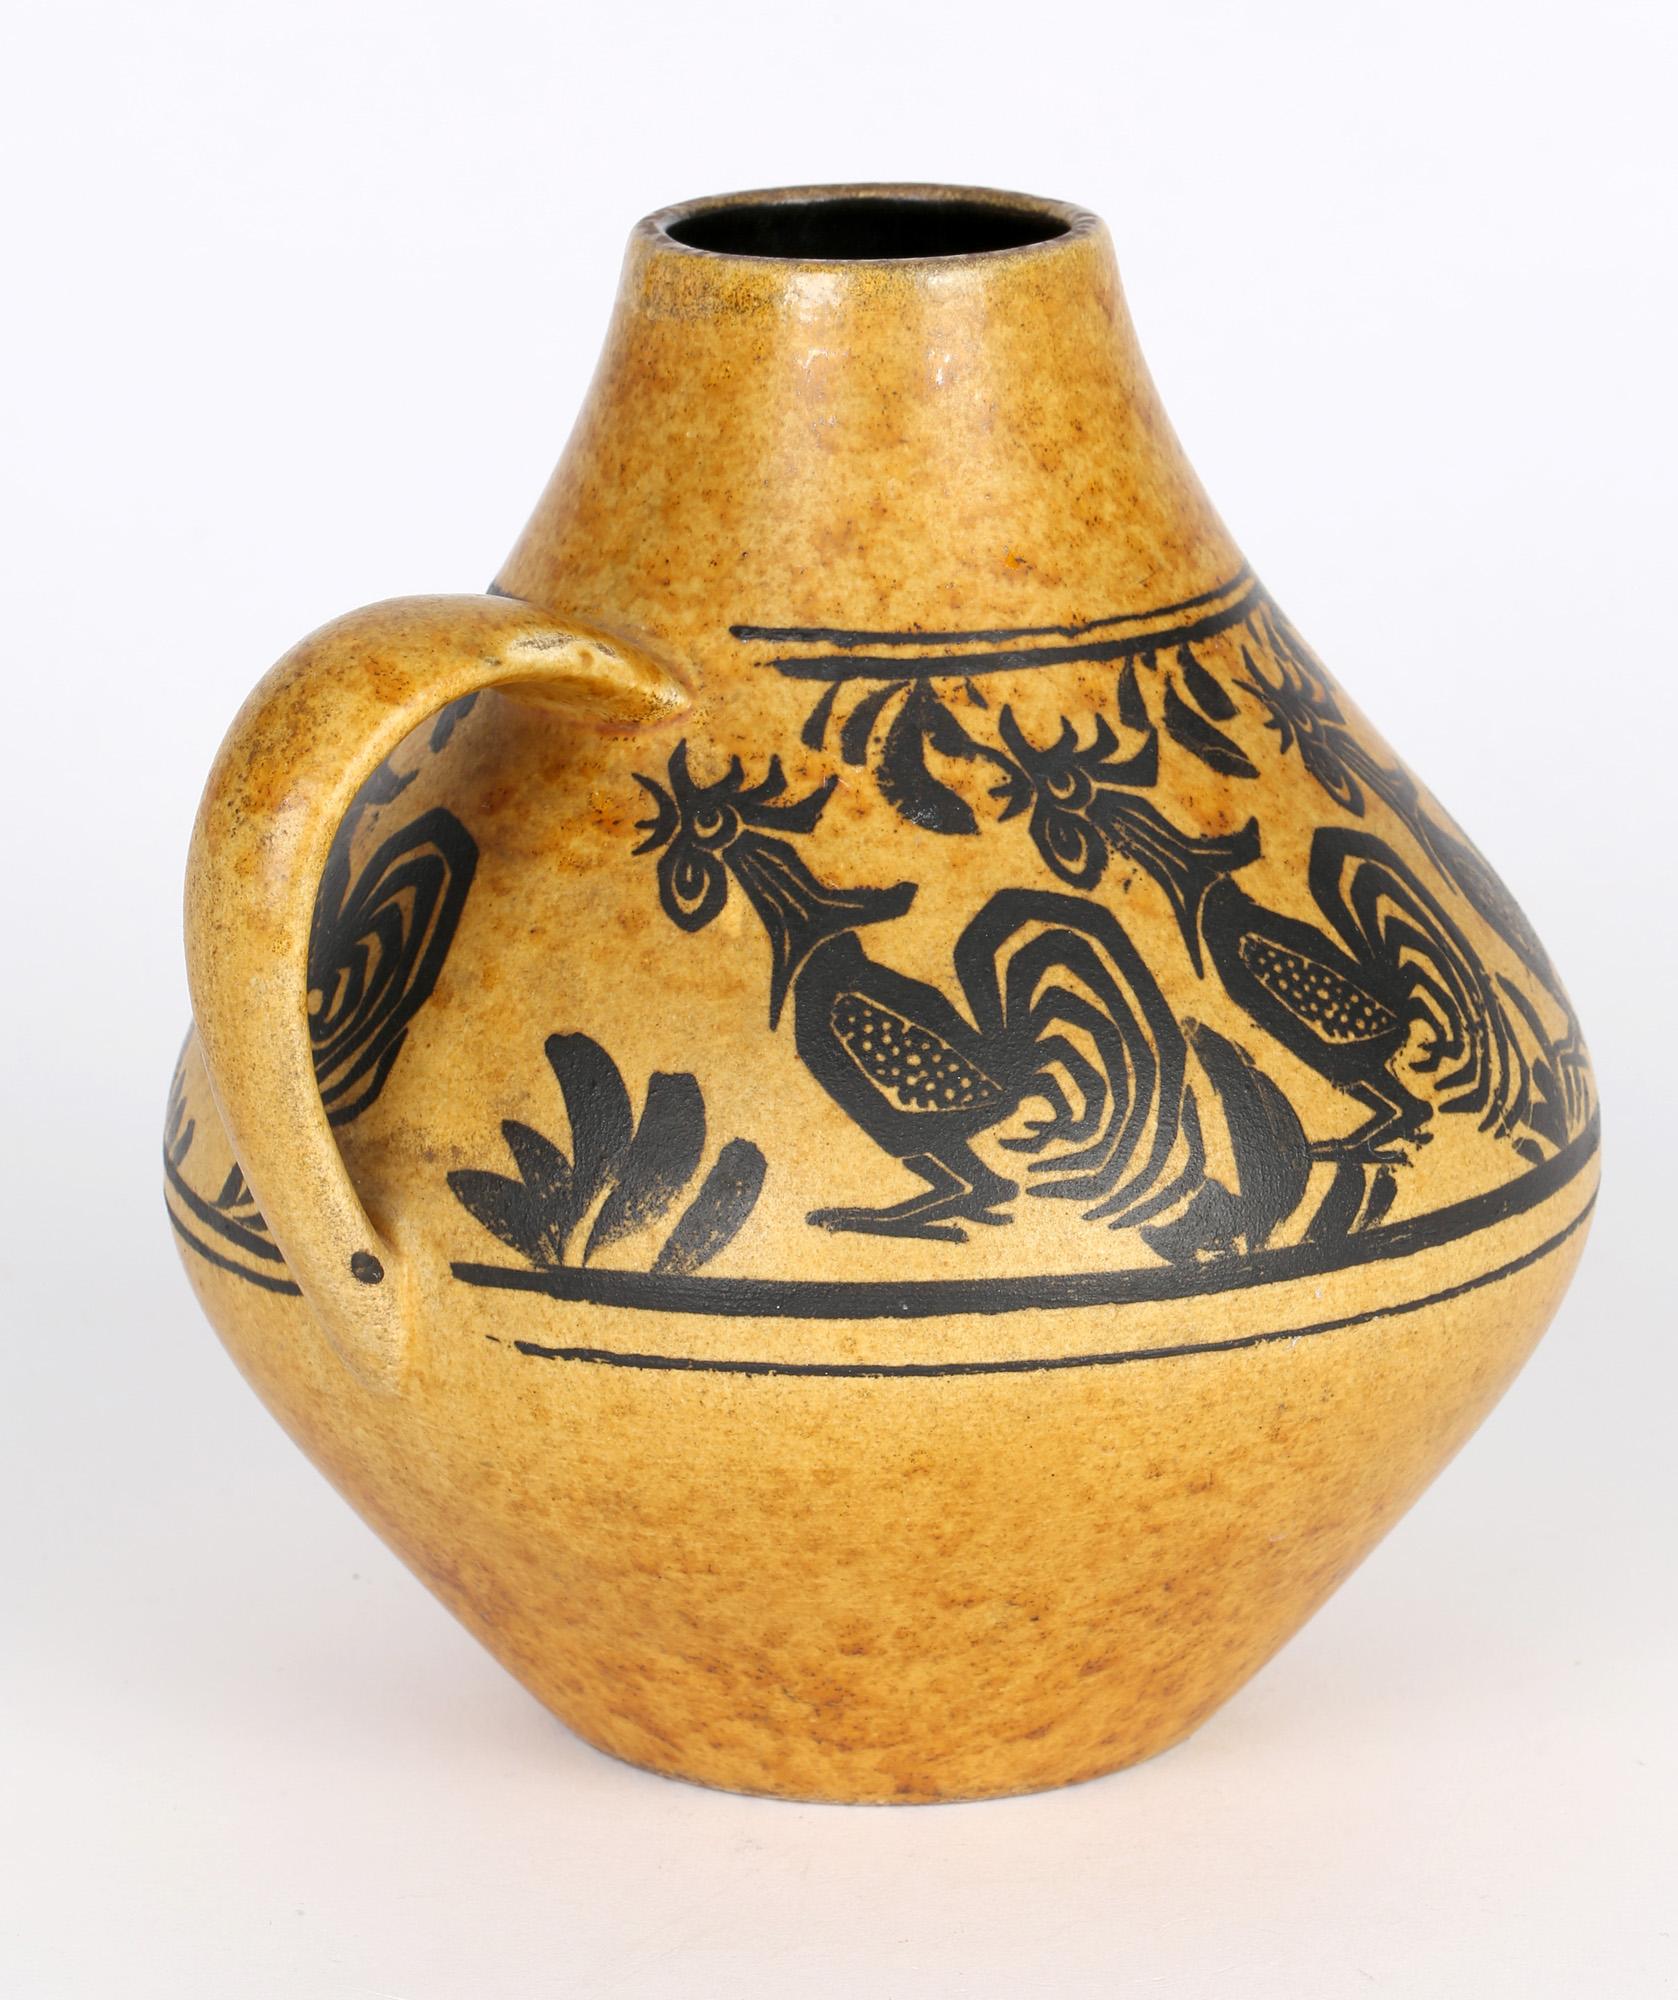 Carstens West German Handled Art Pottery Vase with Cockerels For Sale 2